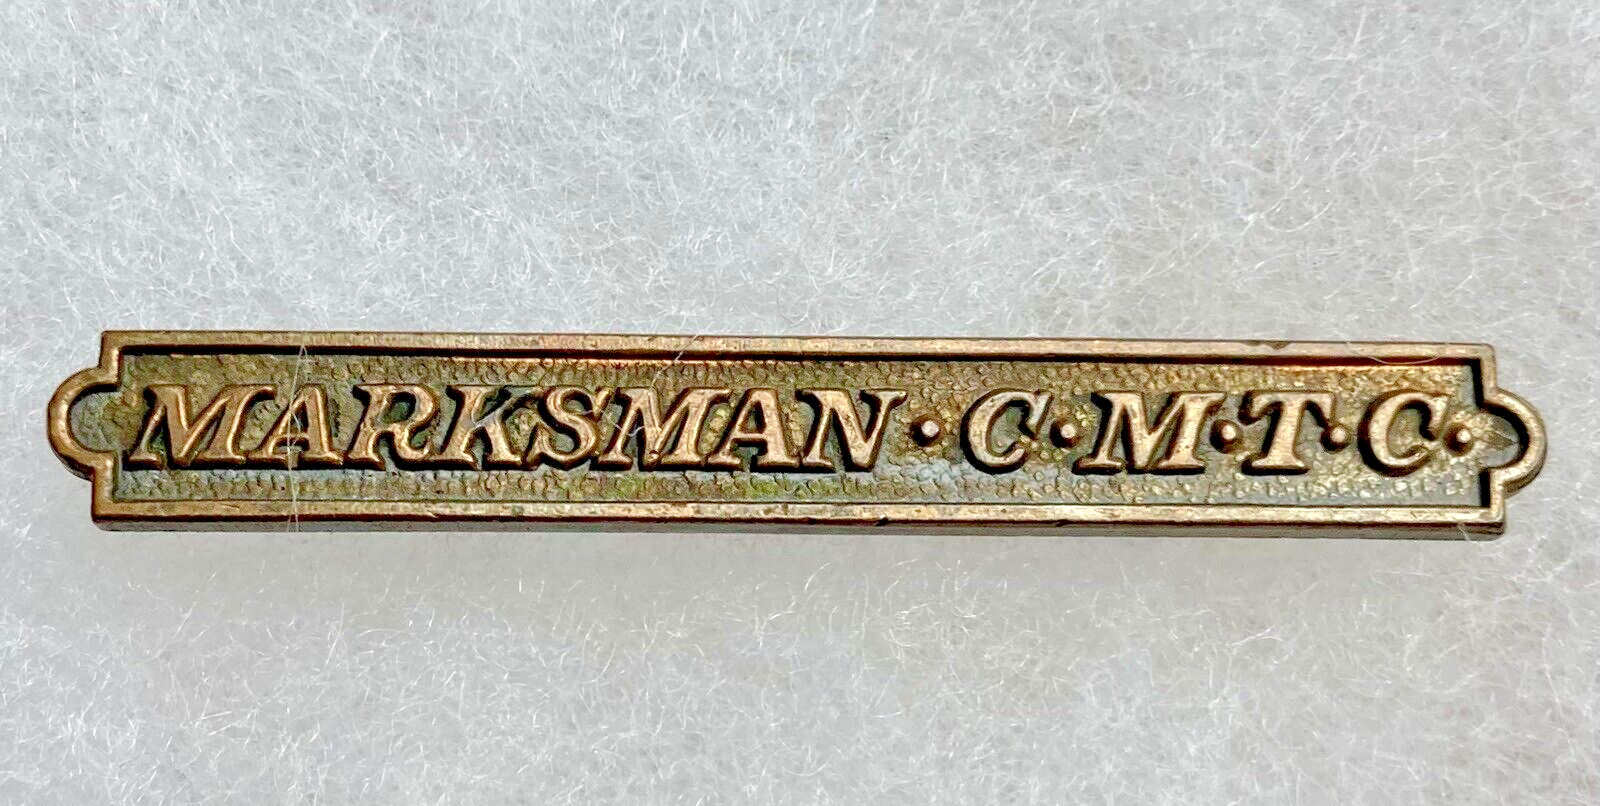 Civilian Military Training Corps (CMTC) Marksman's Badge (pb nhm)